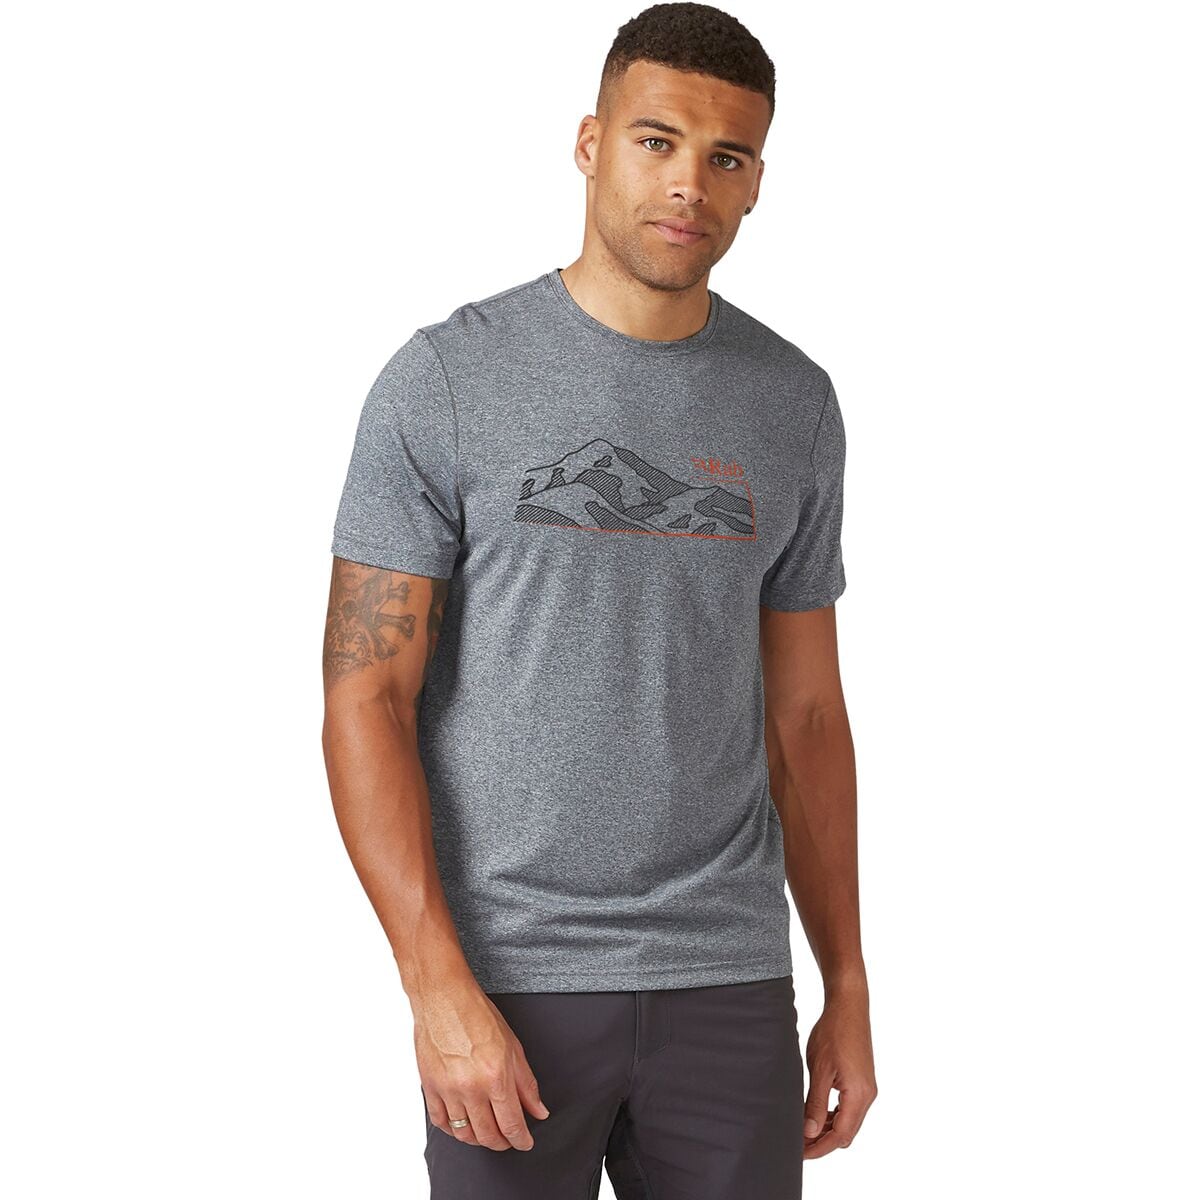 Mantle Mountain T-Shirt - Men